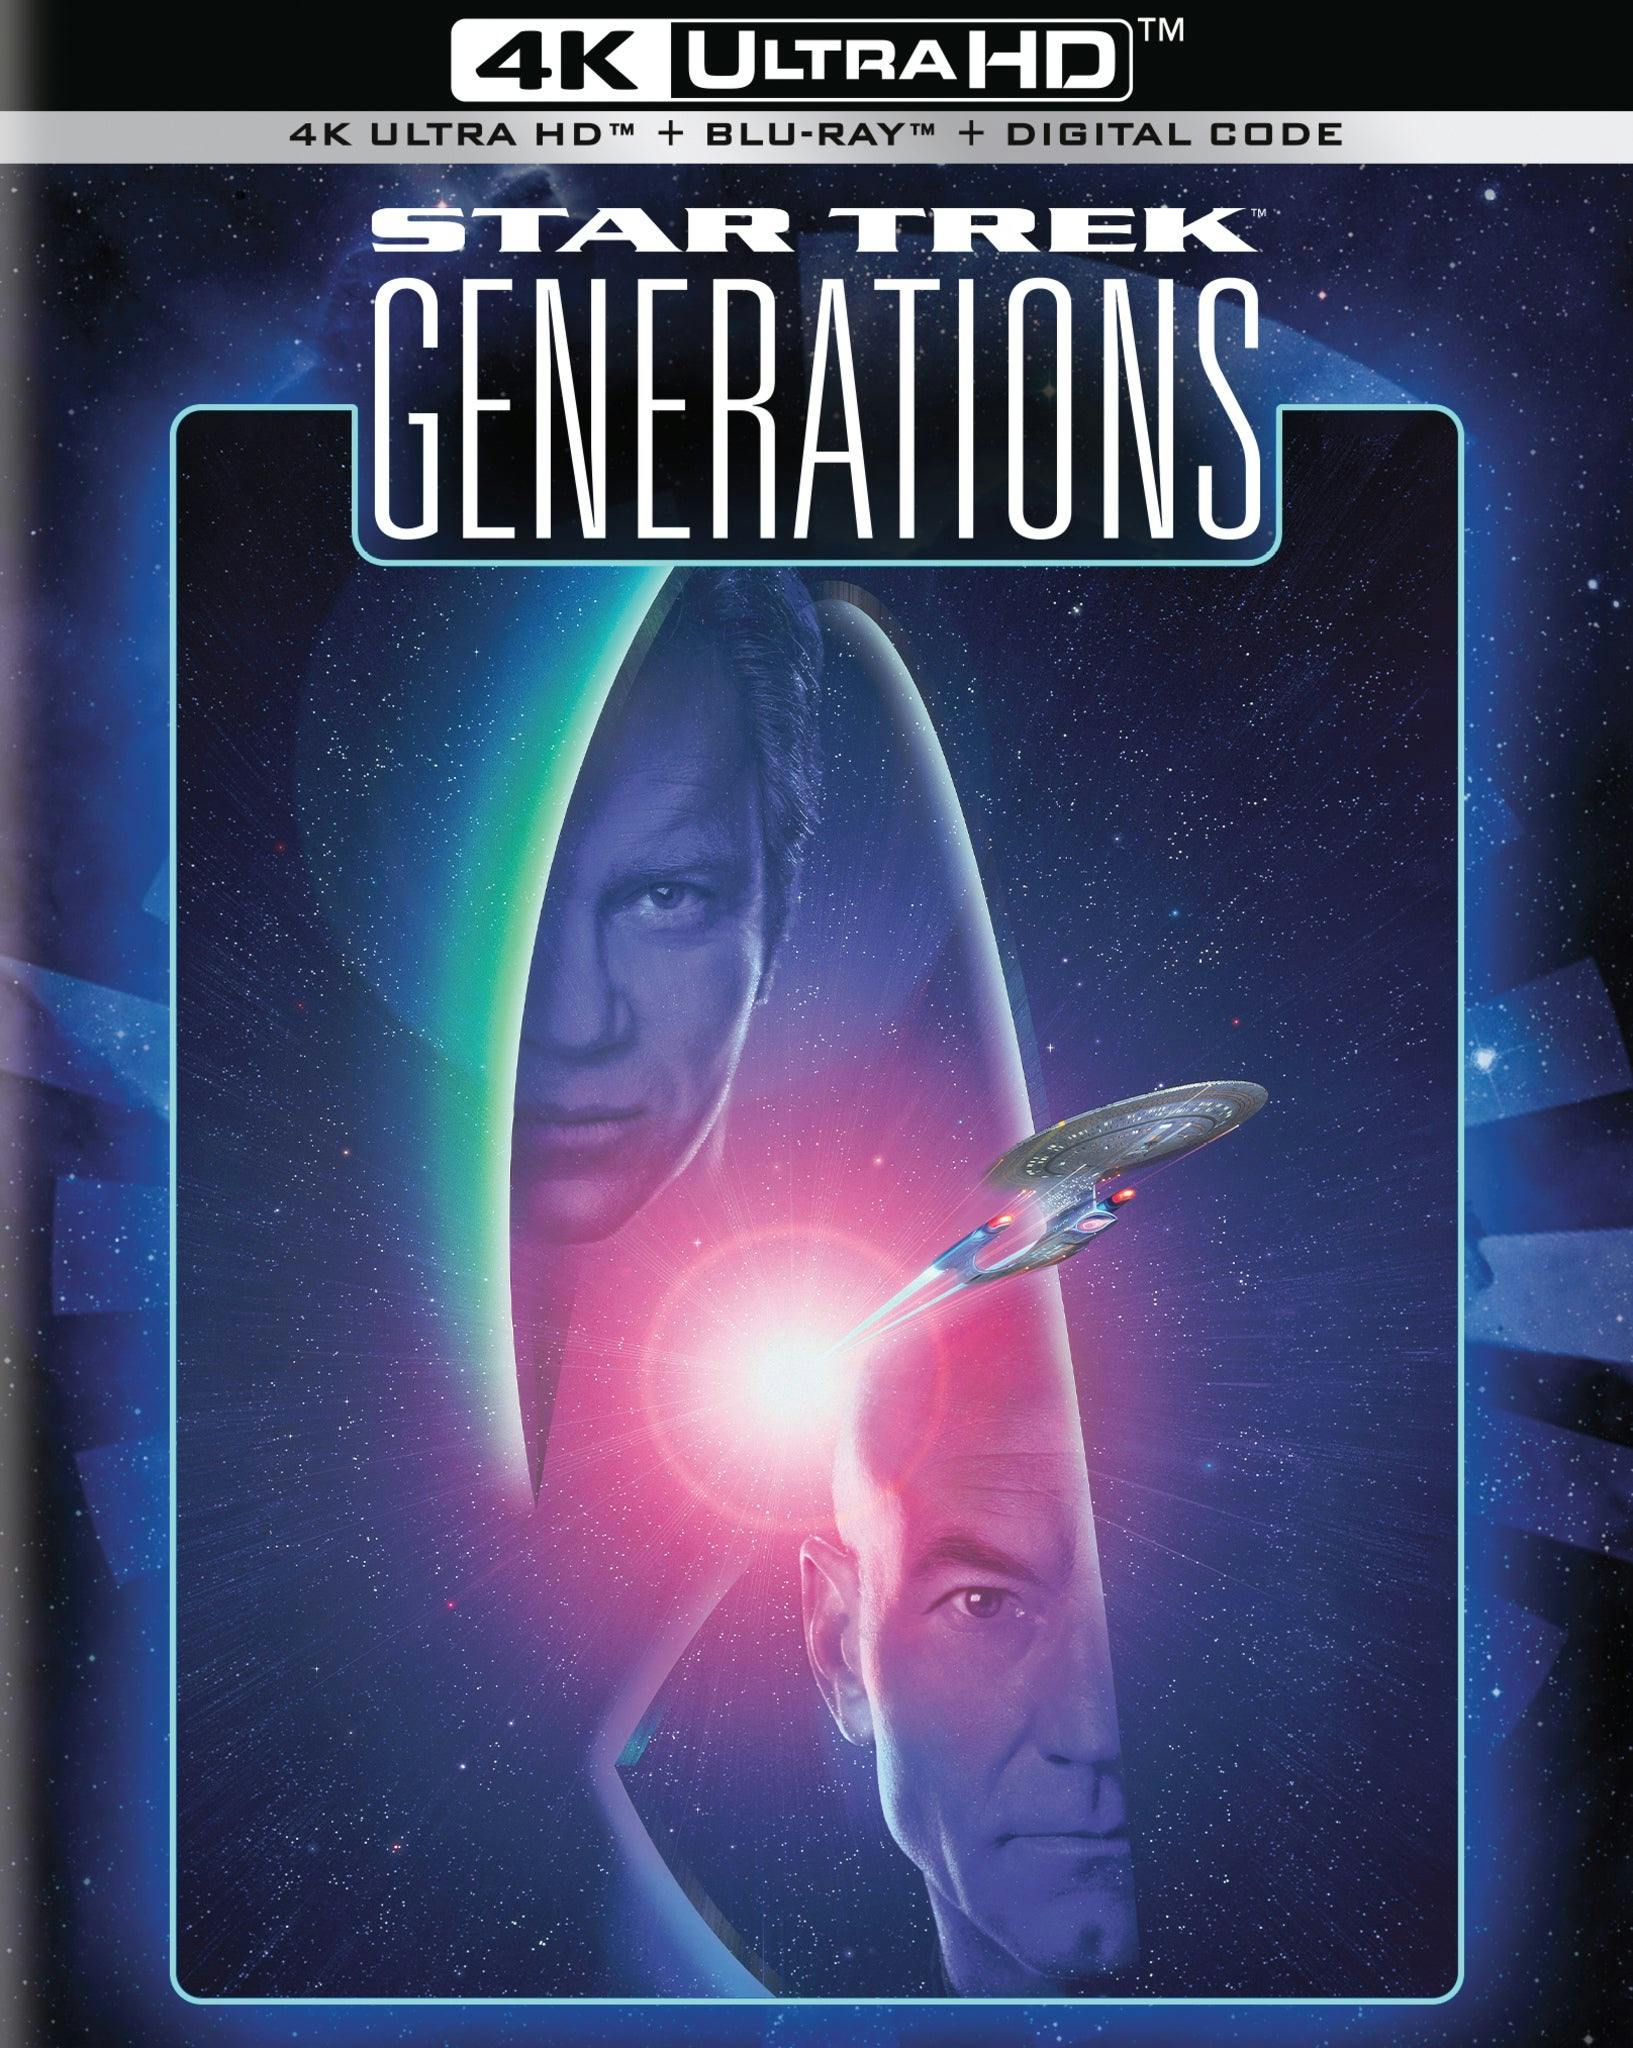 Star Trek Generations 4K Ultra HD packshot